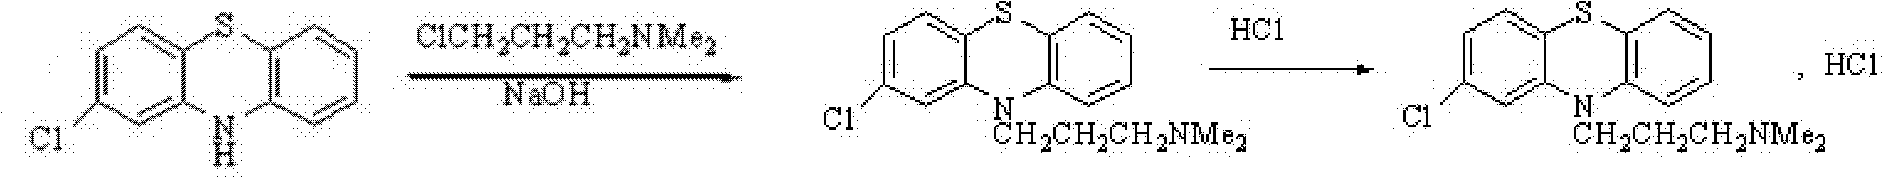 Chlorpromazine hydrochloride synthesis process